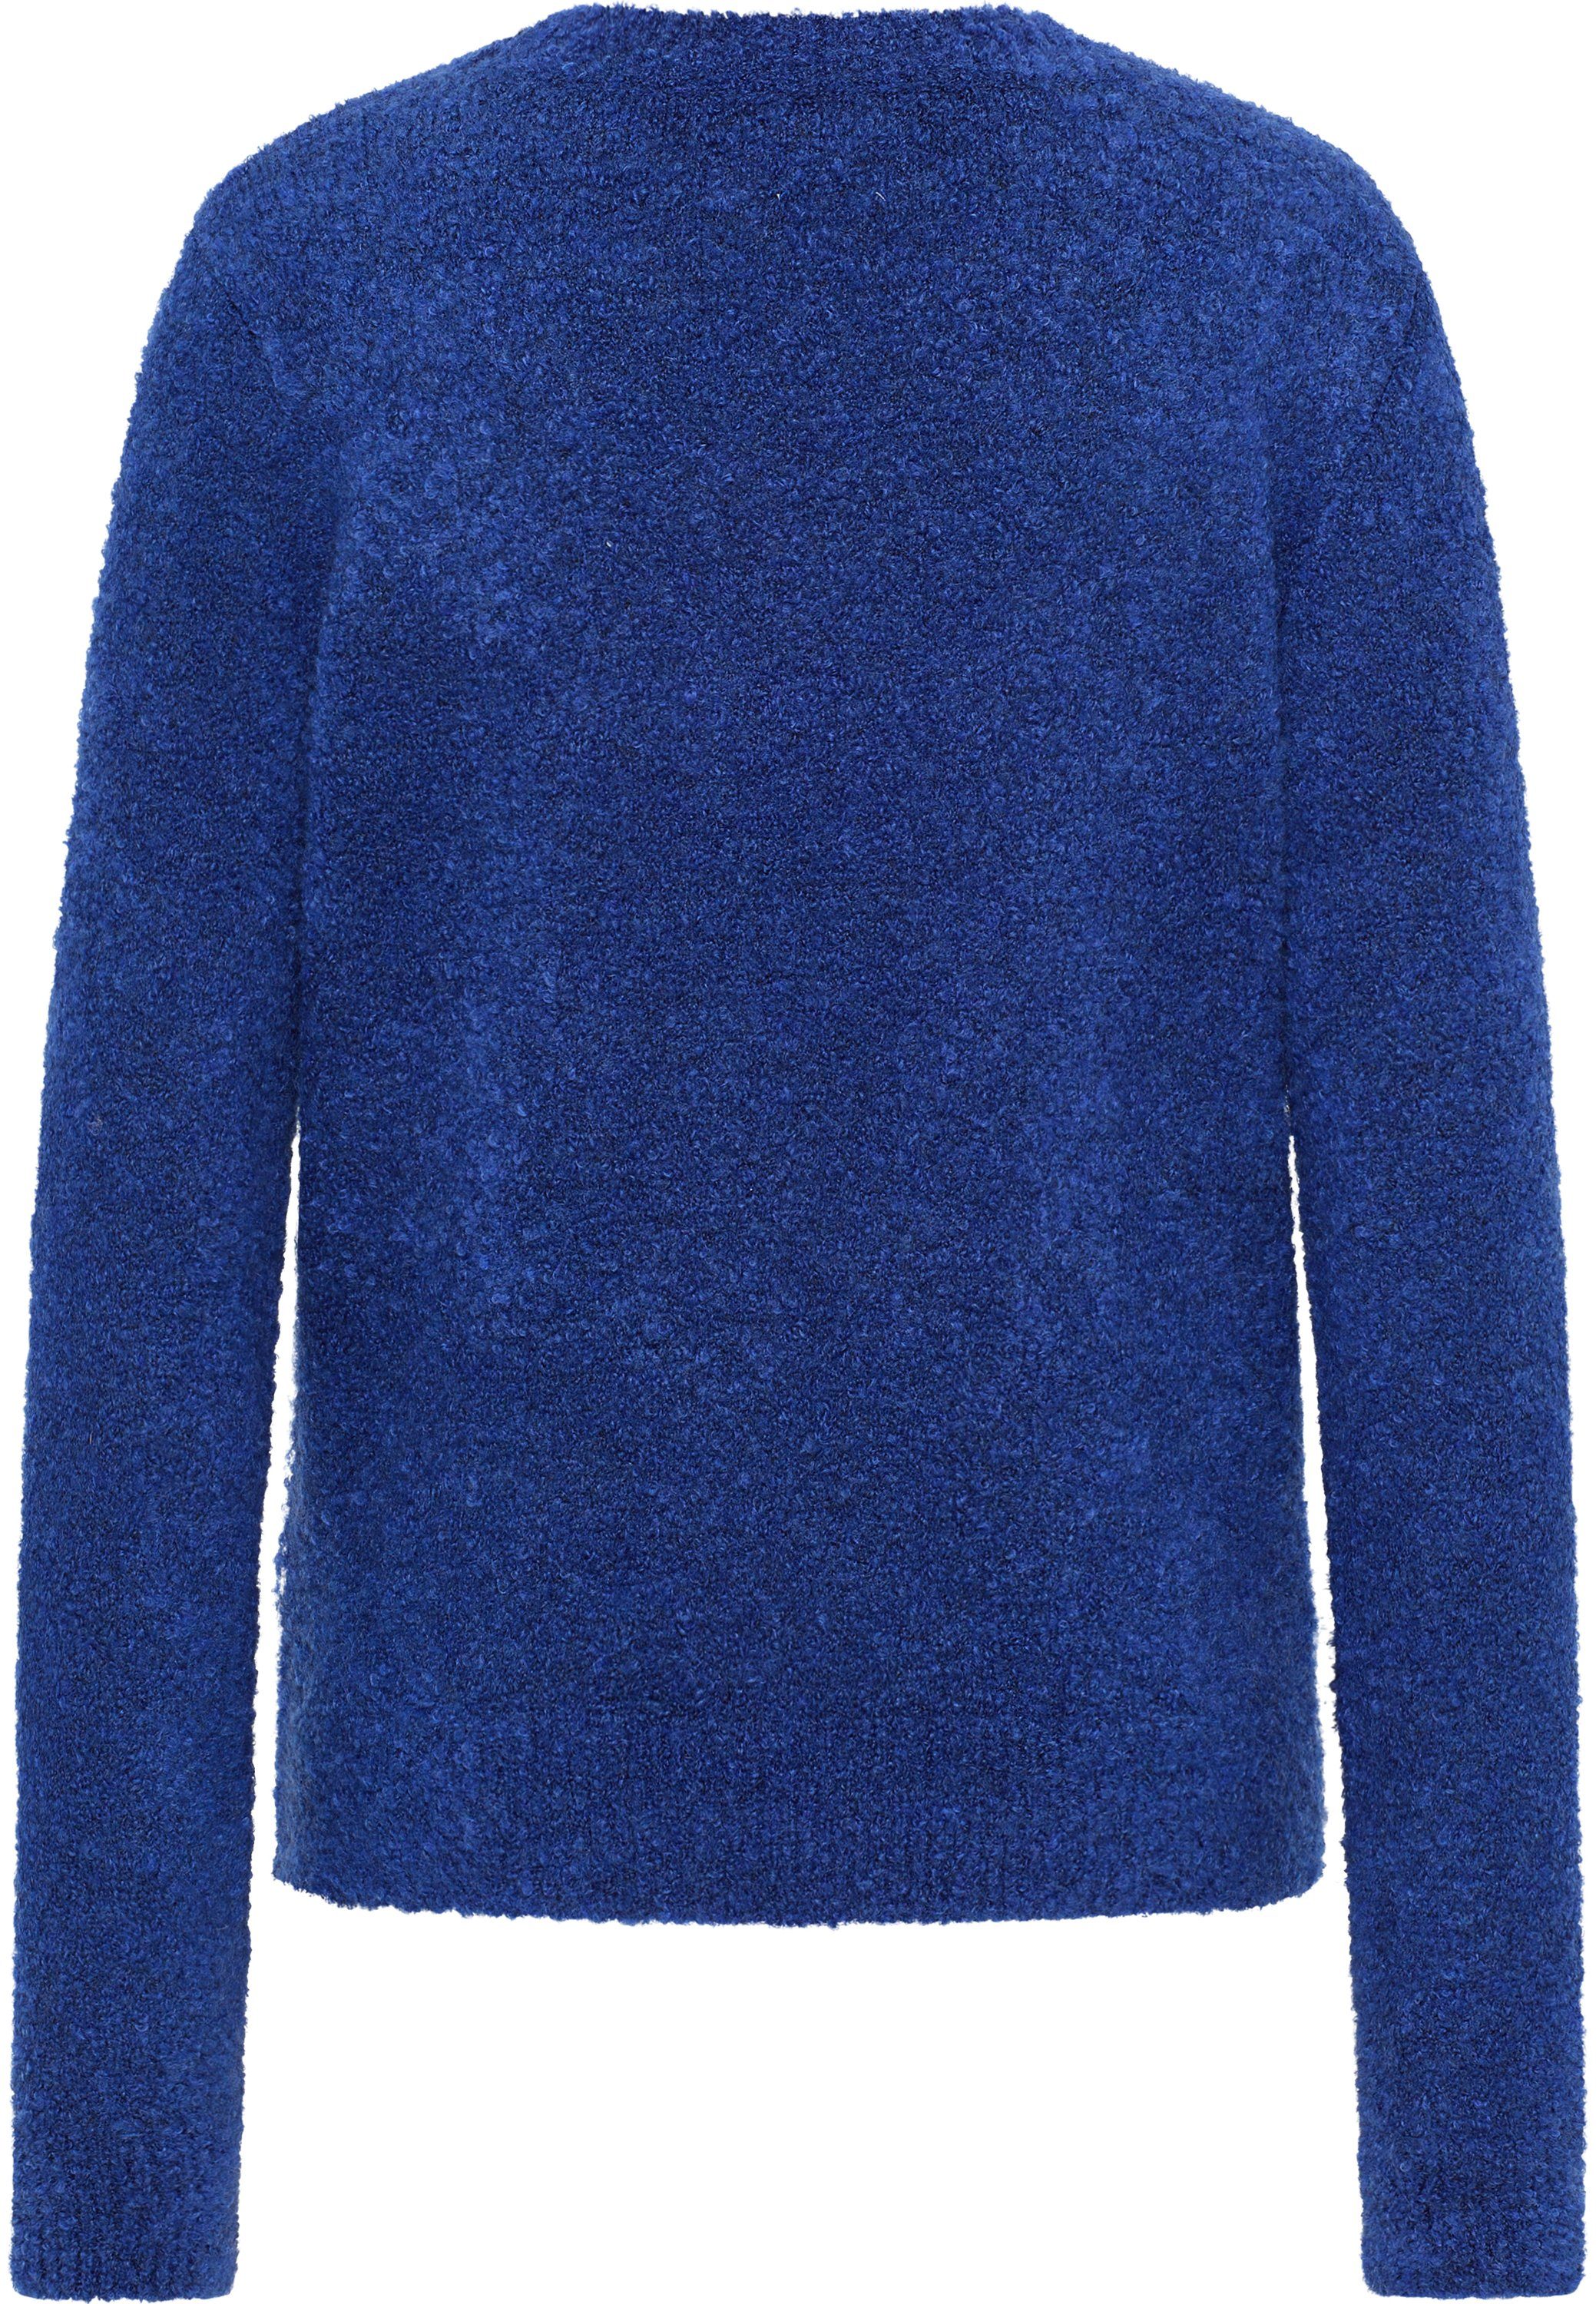 Strickpullover MUSTANG Mustang Sweater königsblau